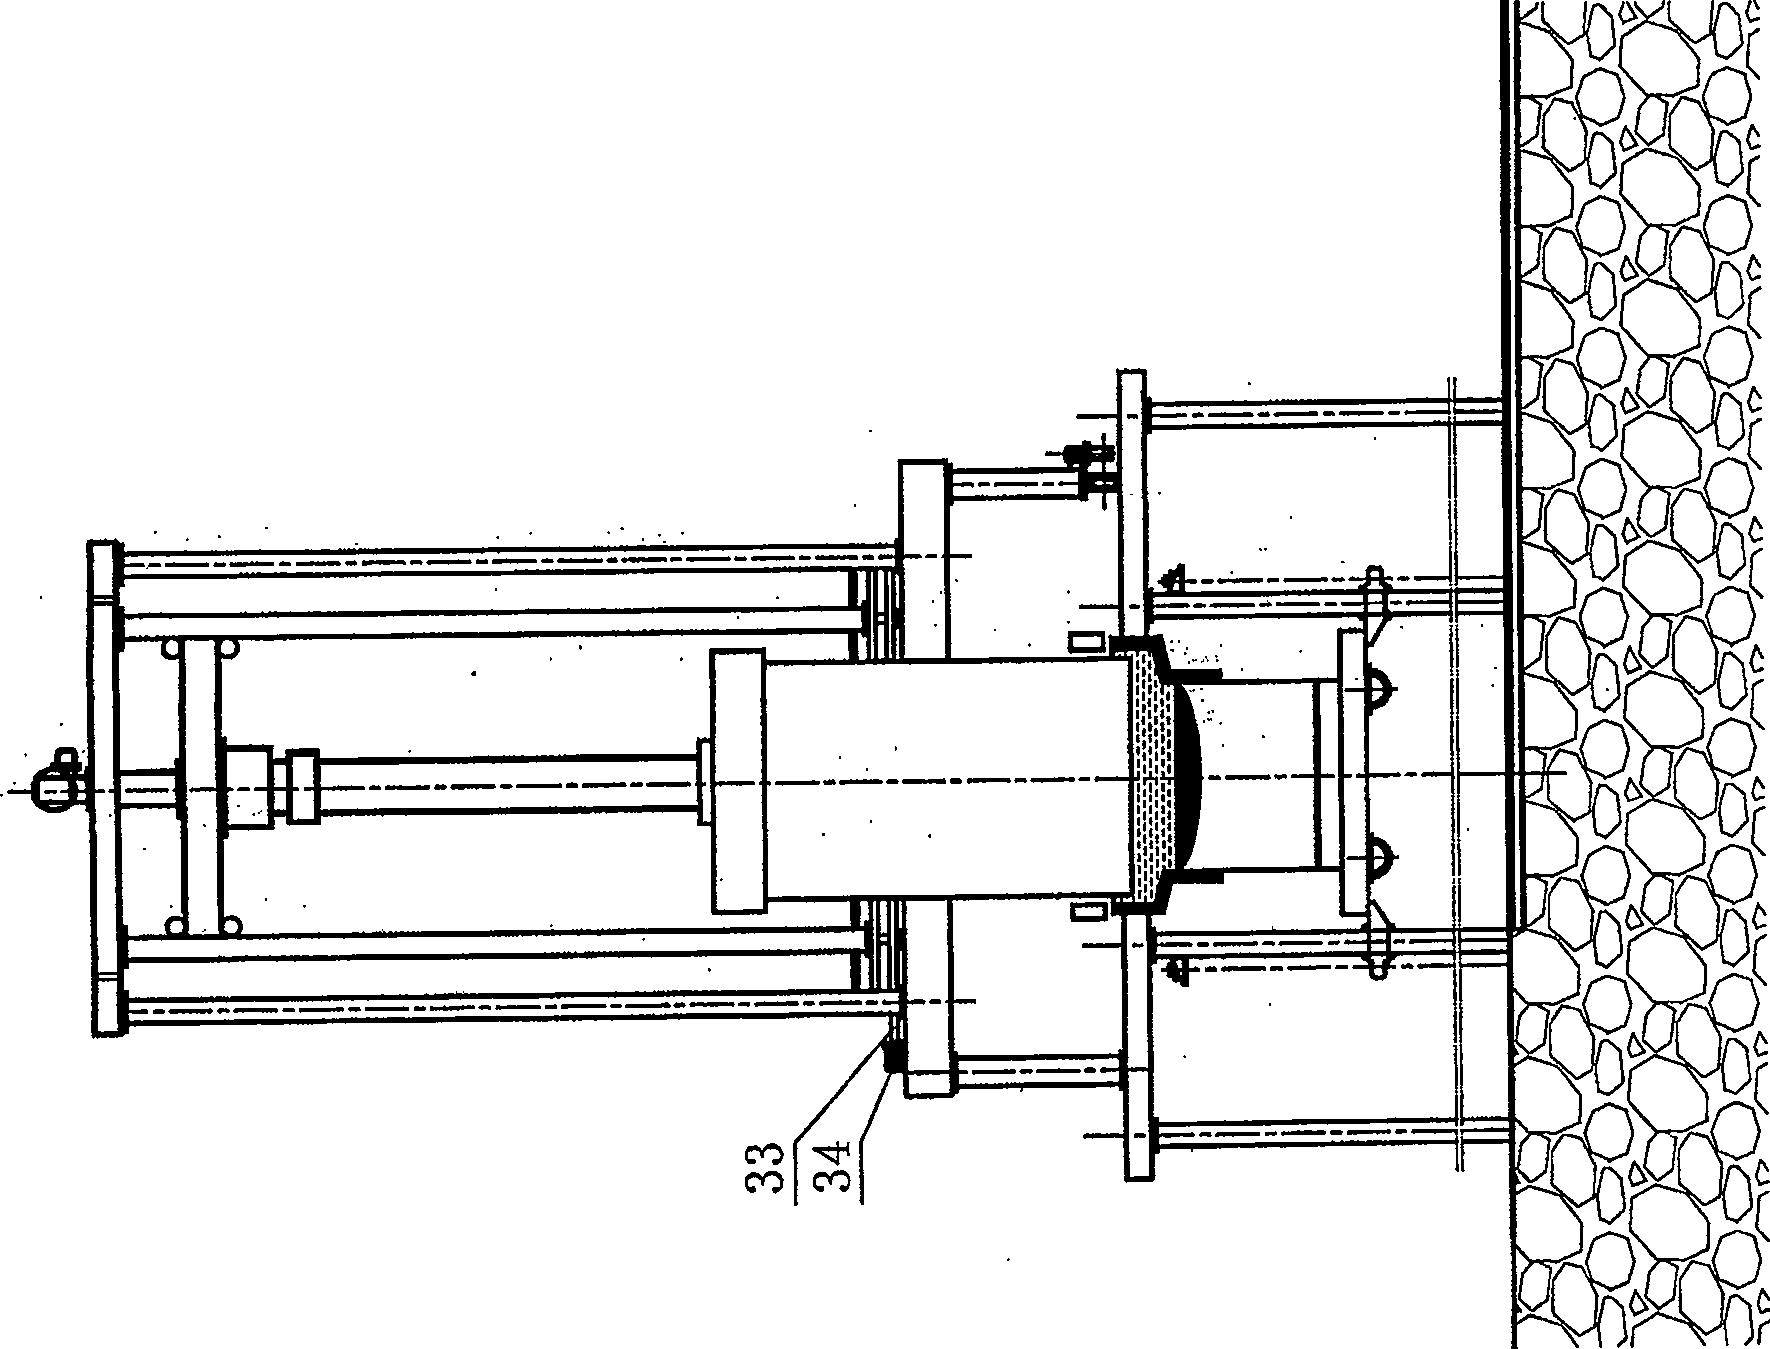 Plate blank electroslag furnace